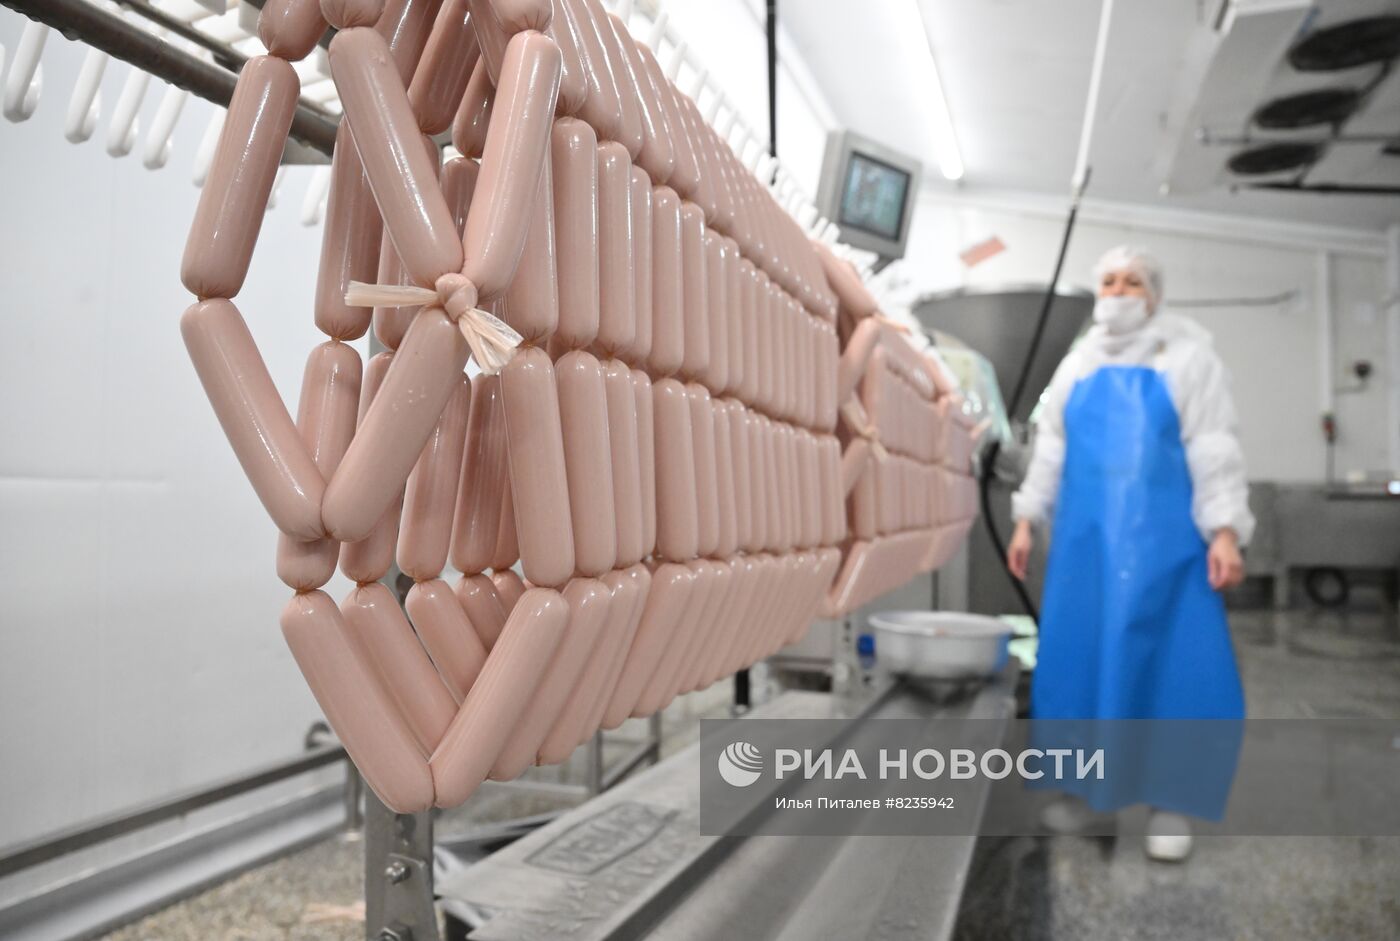 Мясоперерабатывающий завод "Рузком"